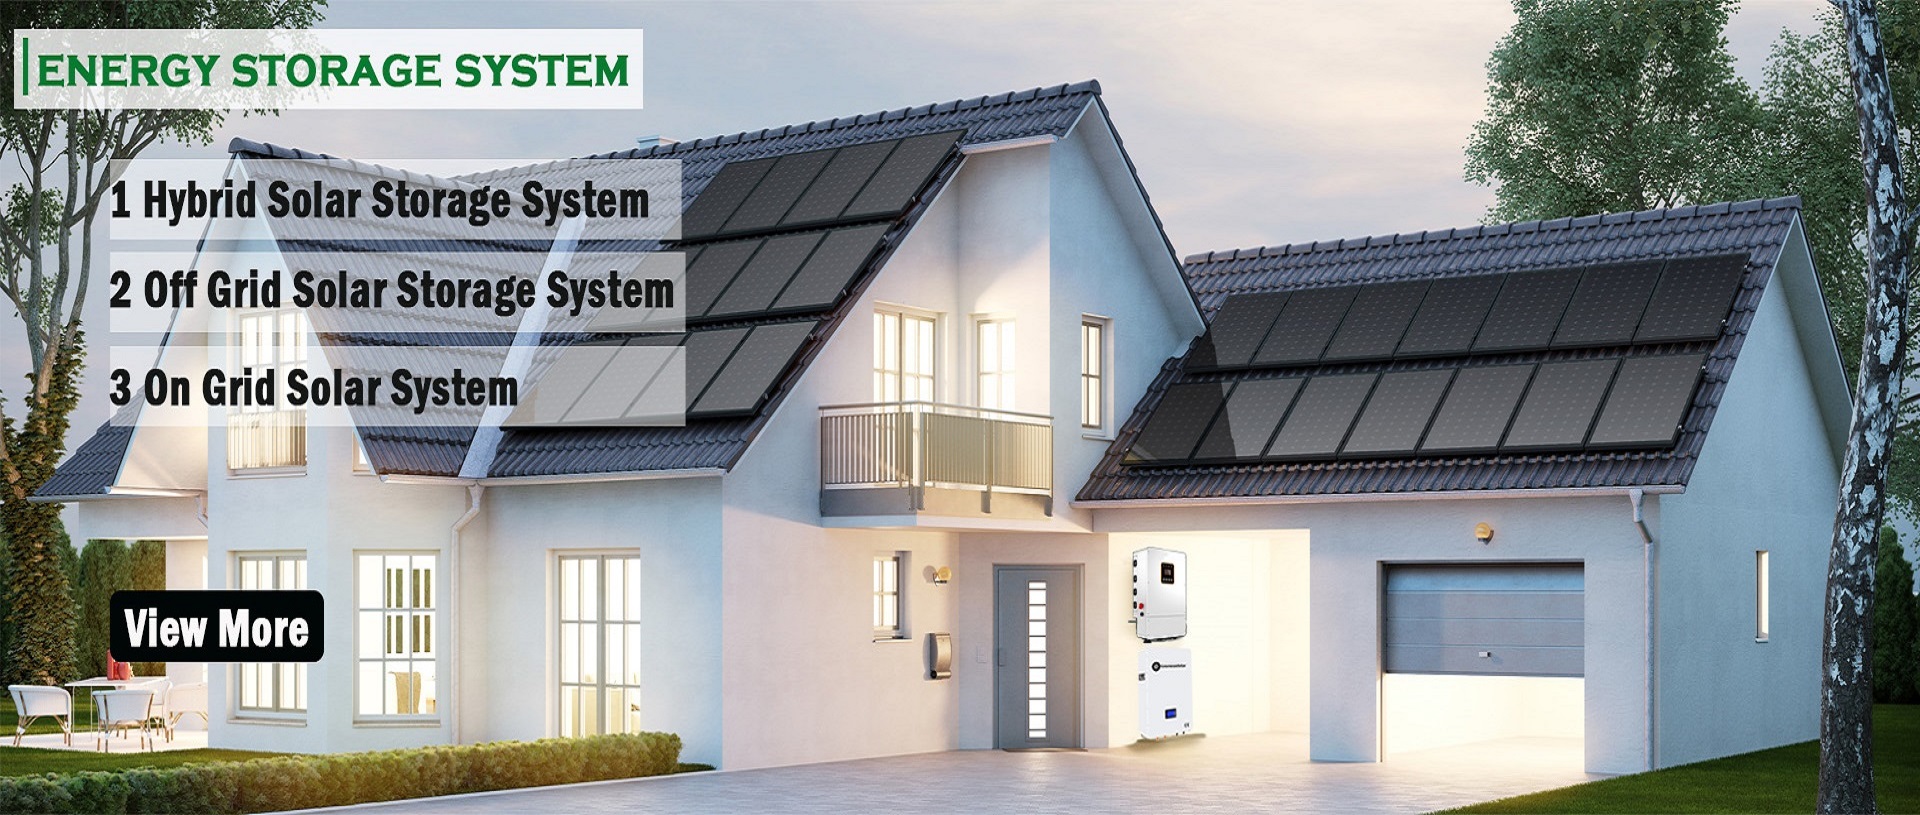 Home energy storage system